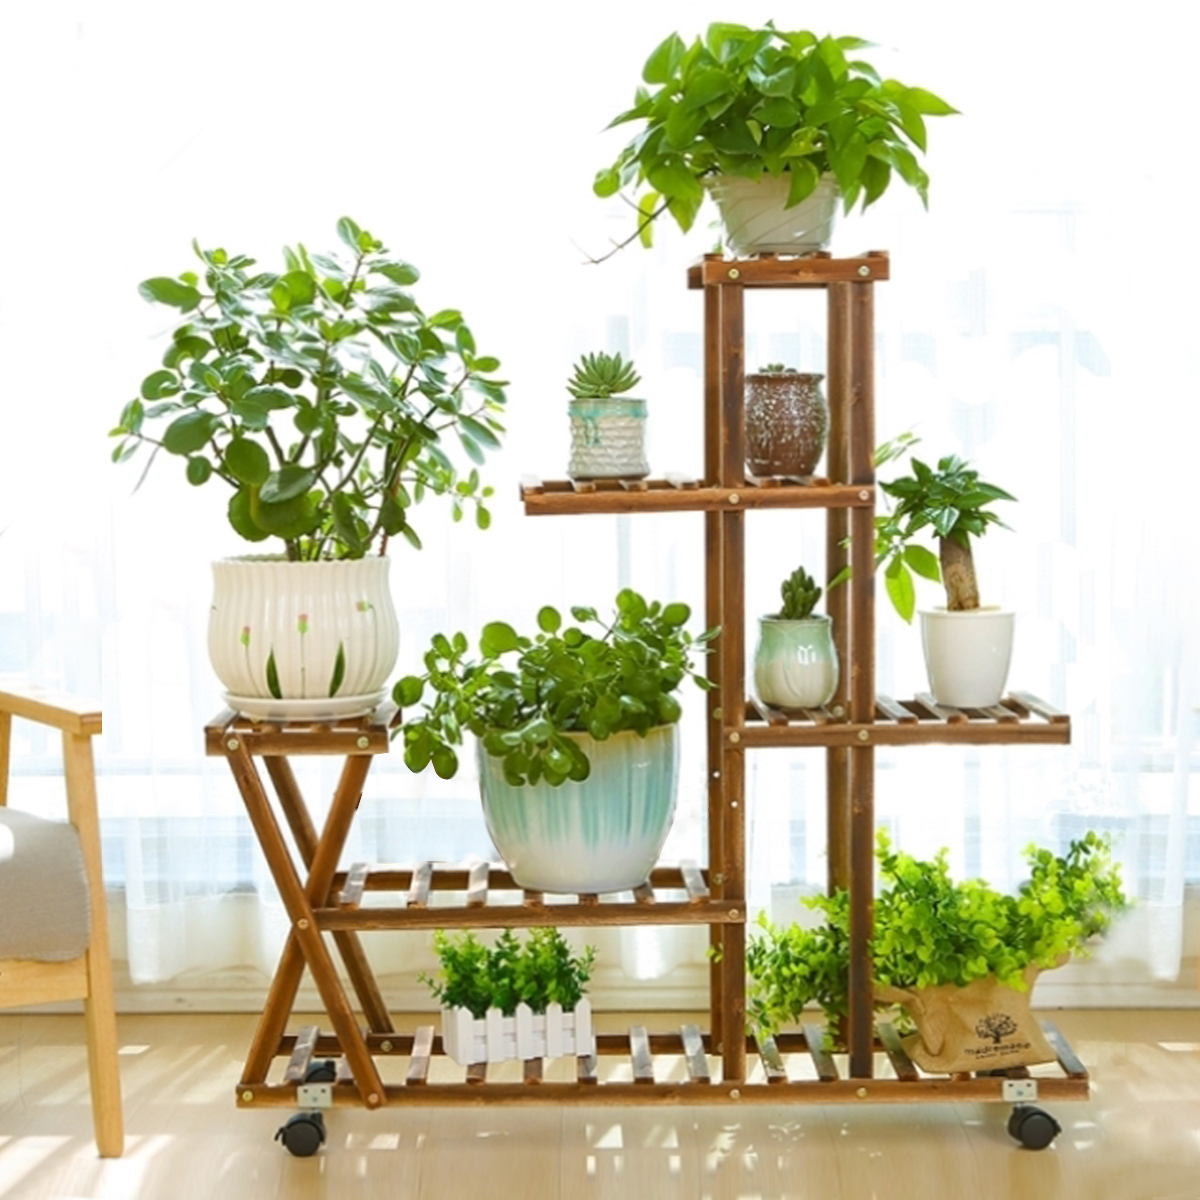 Wooden Plant Flower Pot Stand Shelf Indoor Outdoor Garden Planter With Wheels 9